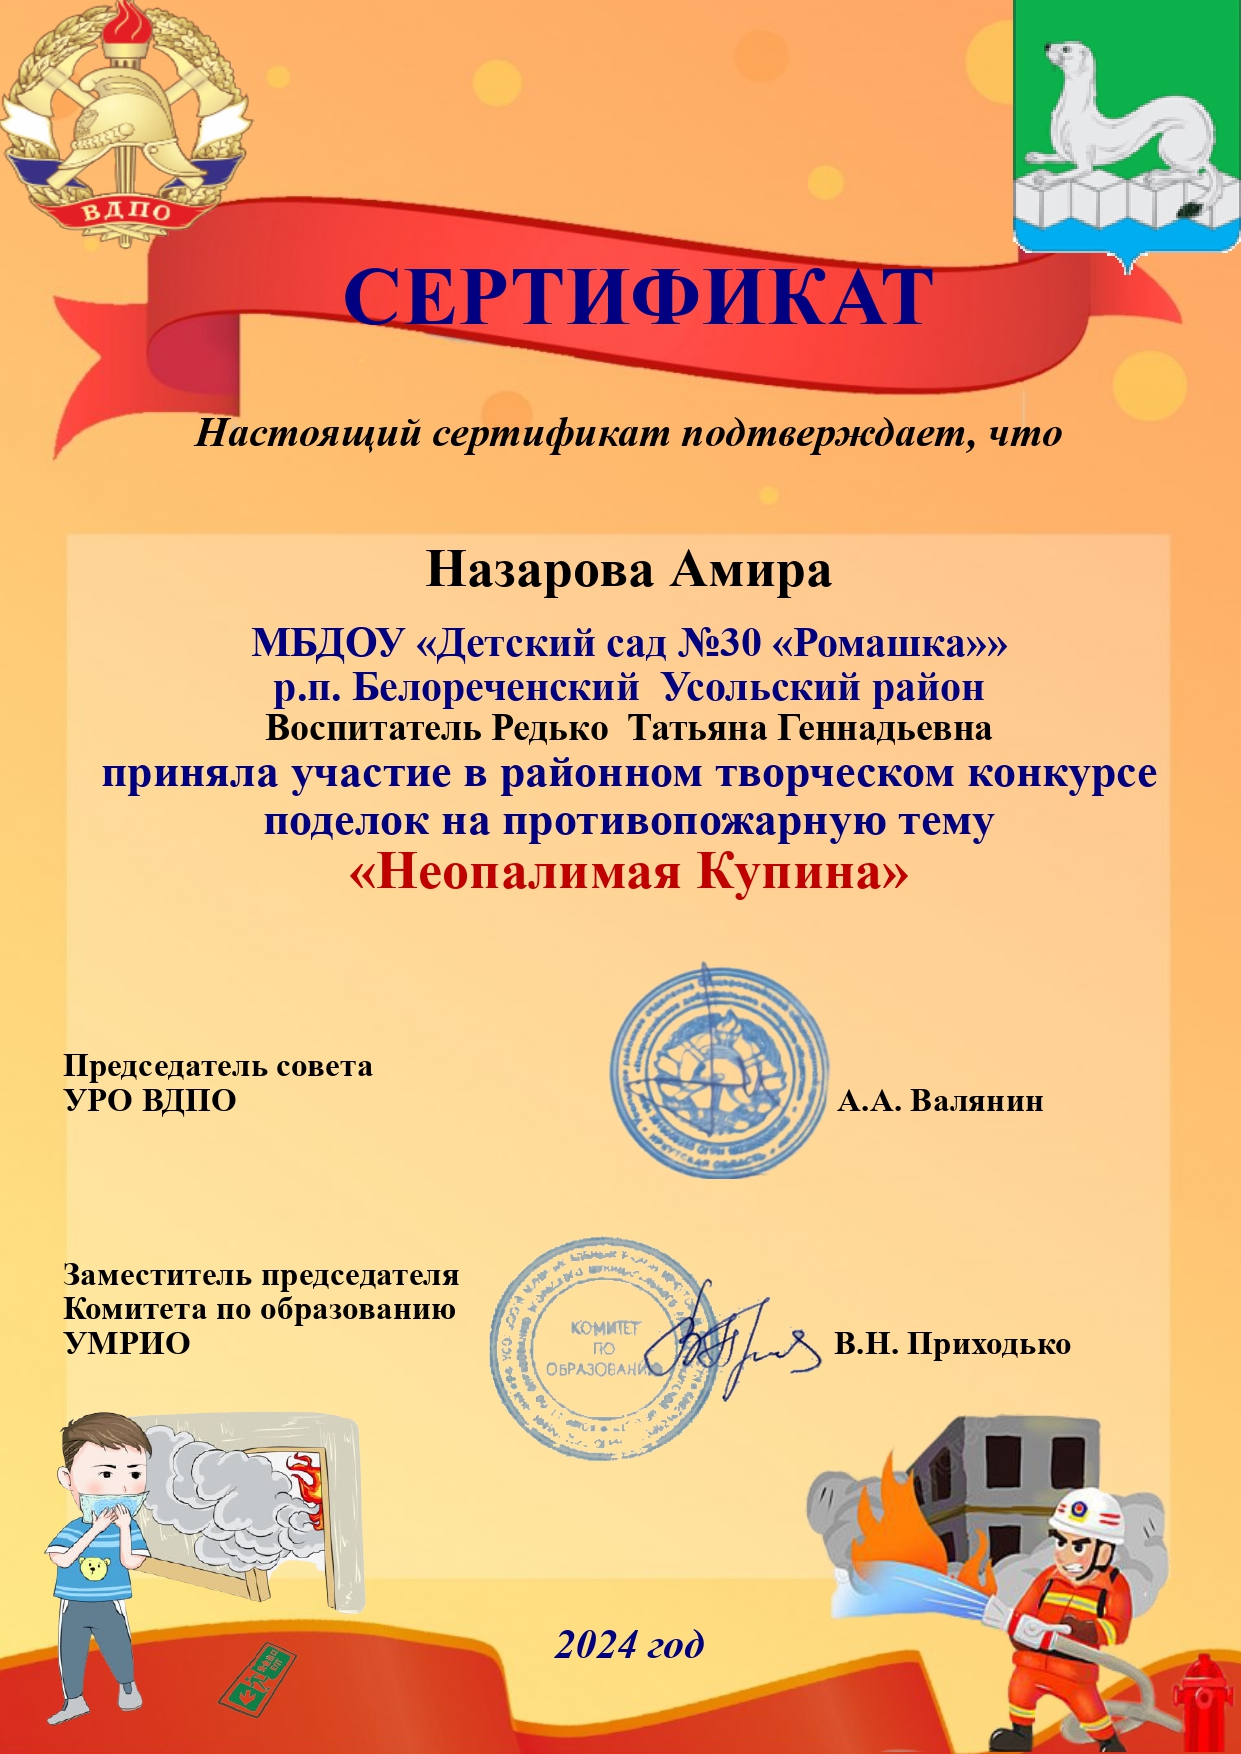 Сертификат поделки Назарова Амира д.сад 30 page 0001